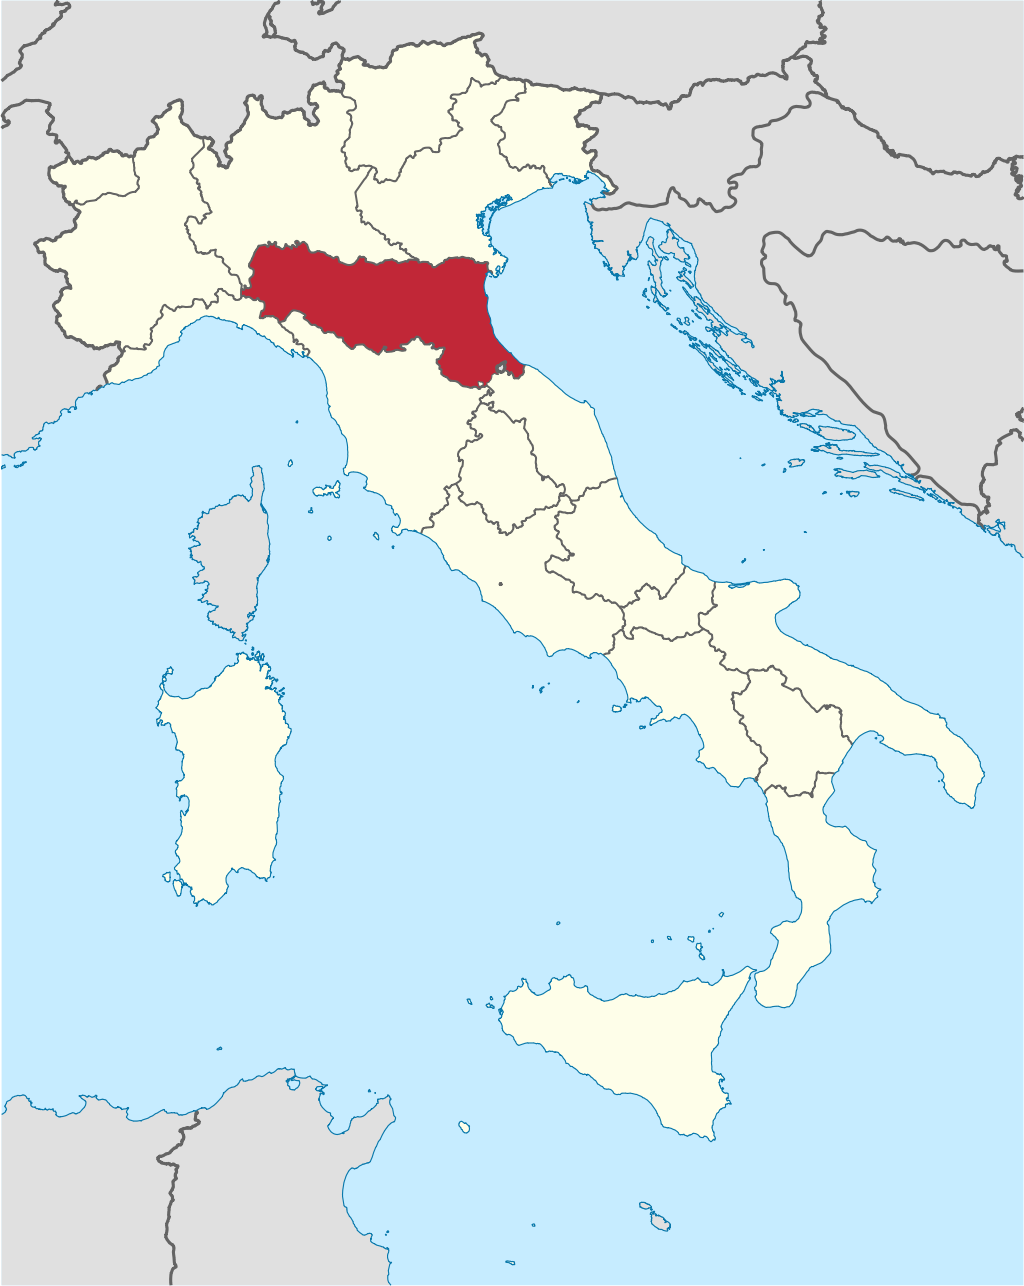 Colonie De Monfestino Urbex location or around the region Emilia-Romagna (Modena), Italy